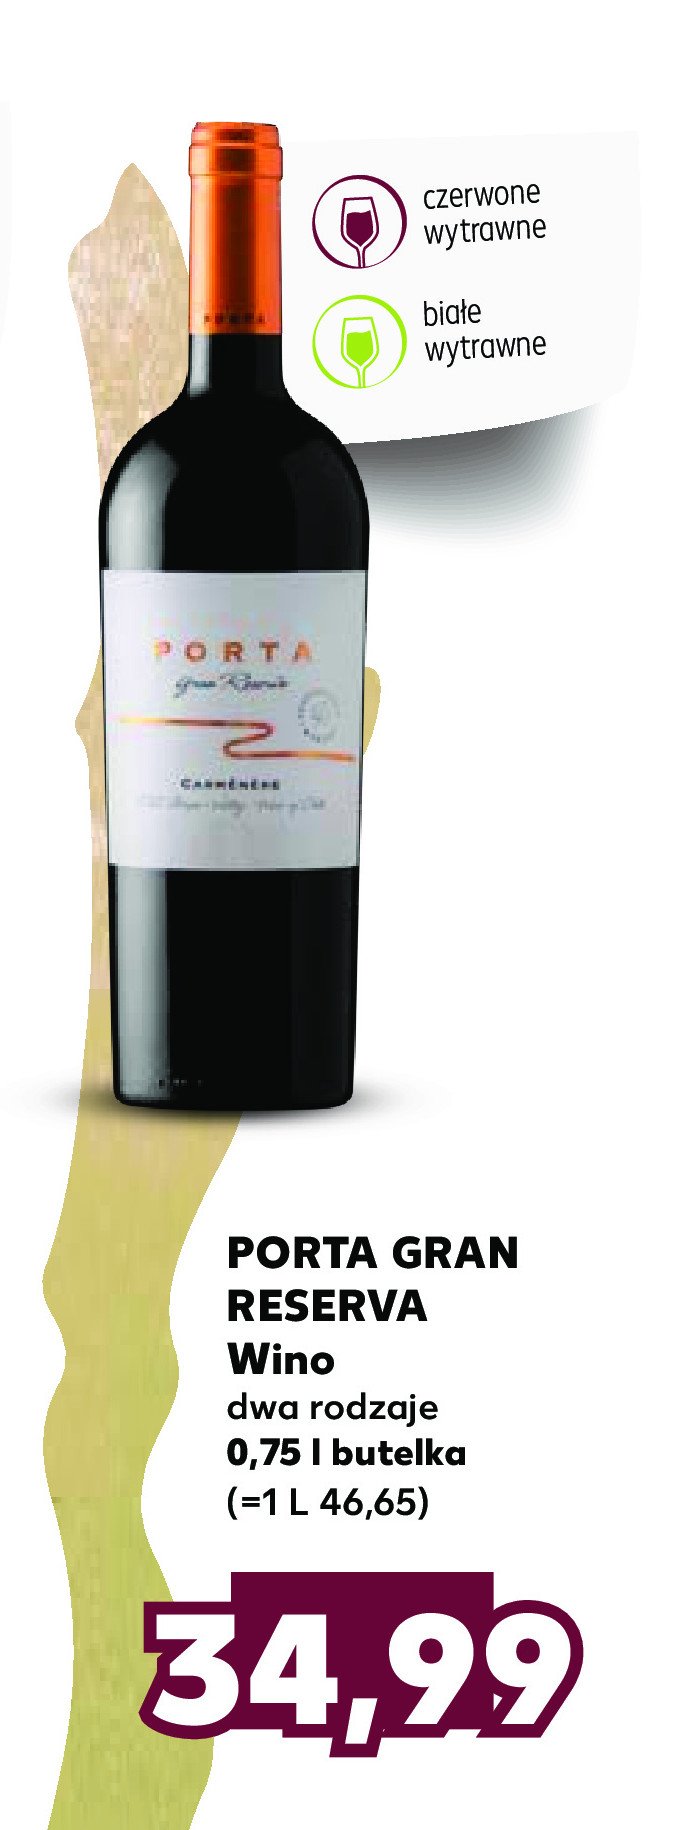 Wino Porta gran reserva carmenere promocja